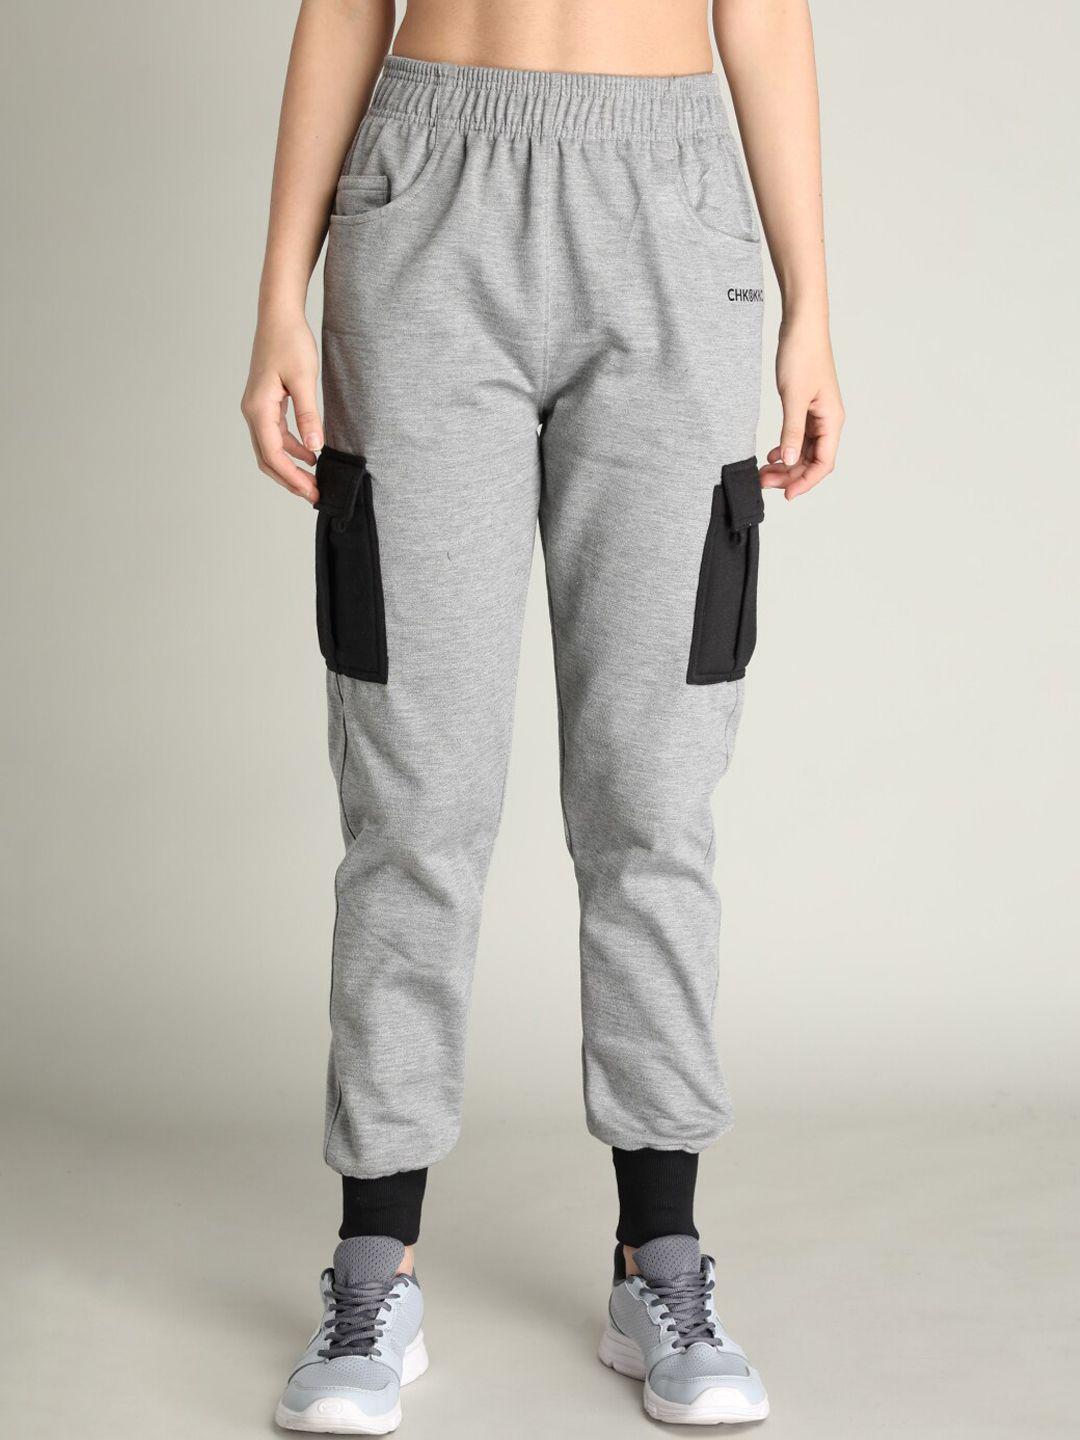 chkokko-women-black-&-grey-colourblocked-cotton-track-pants